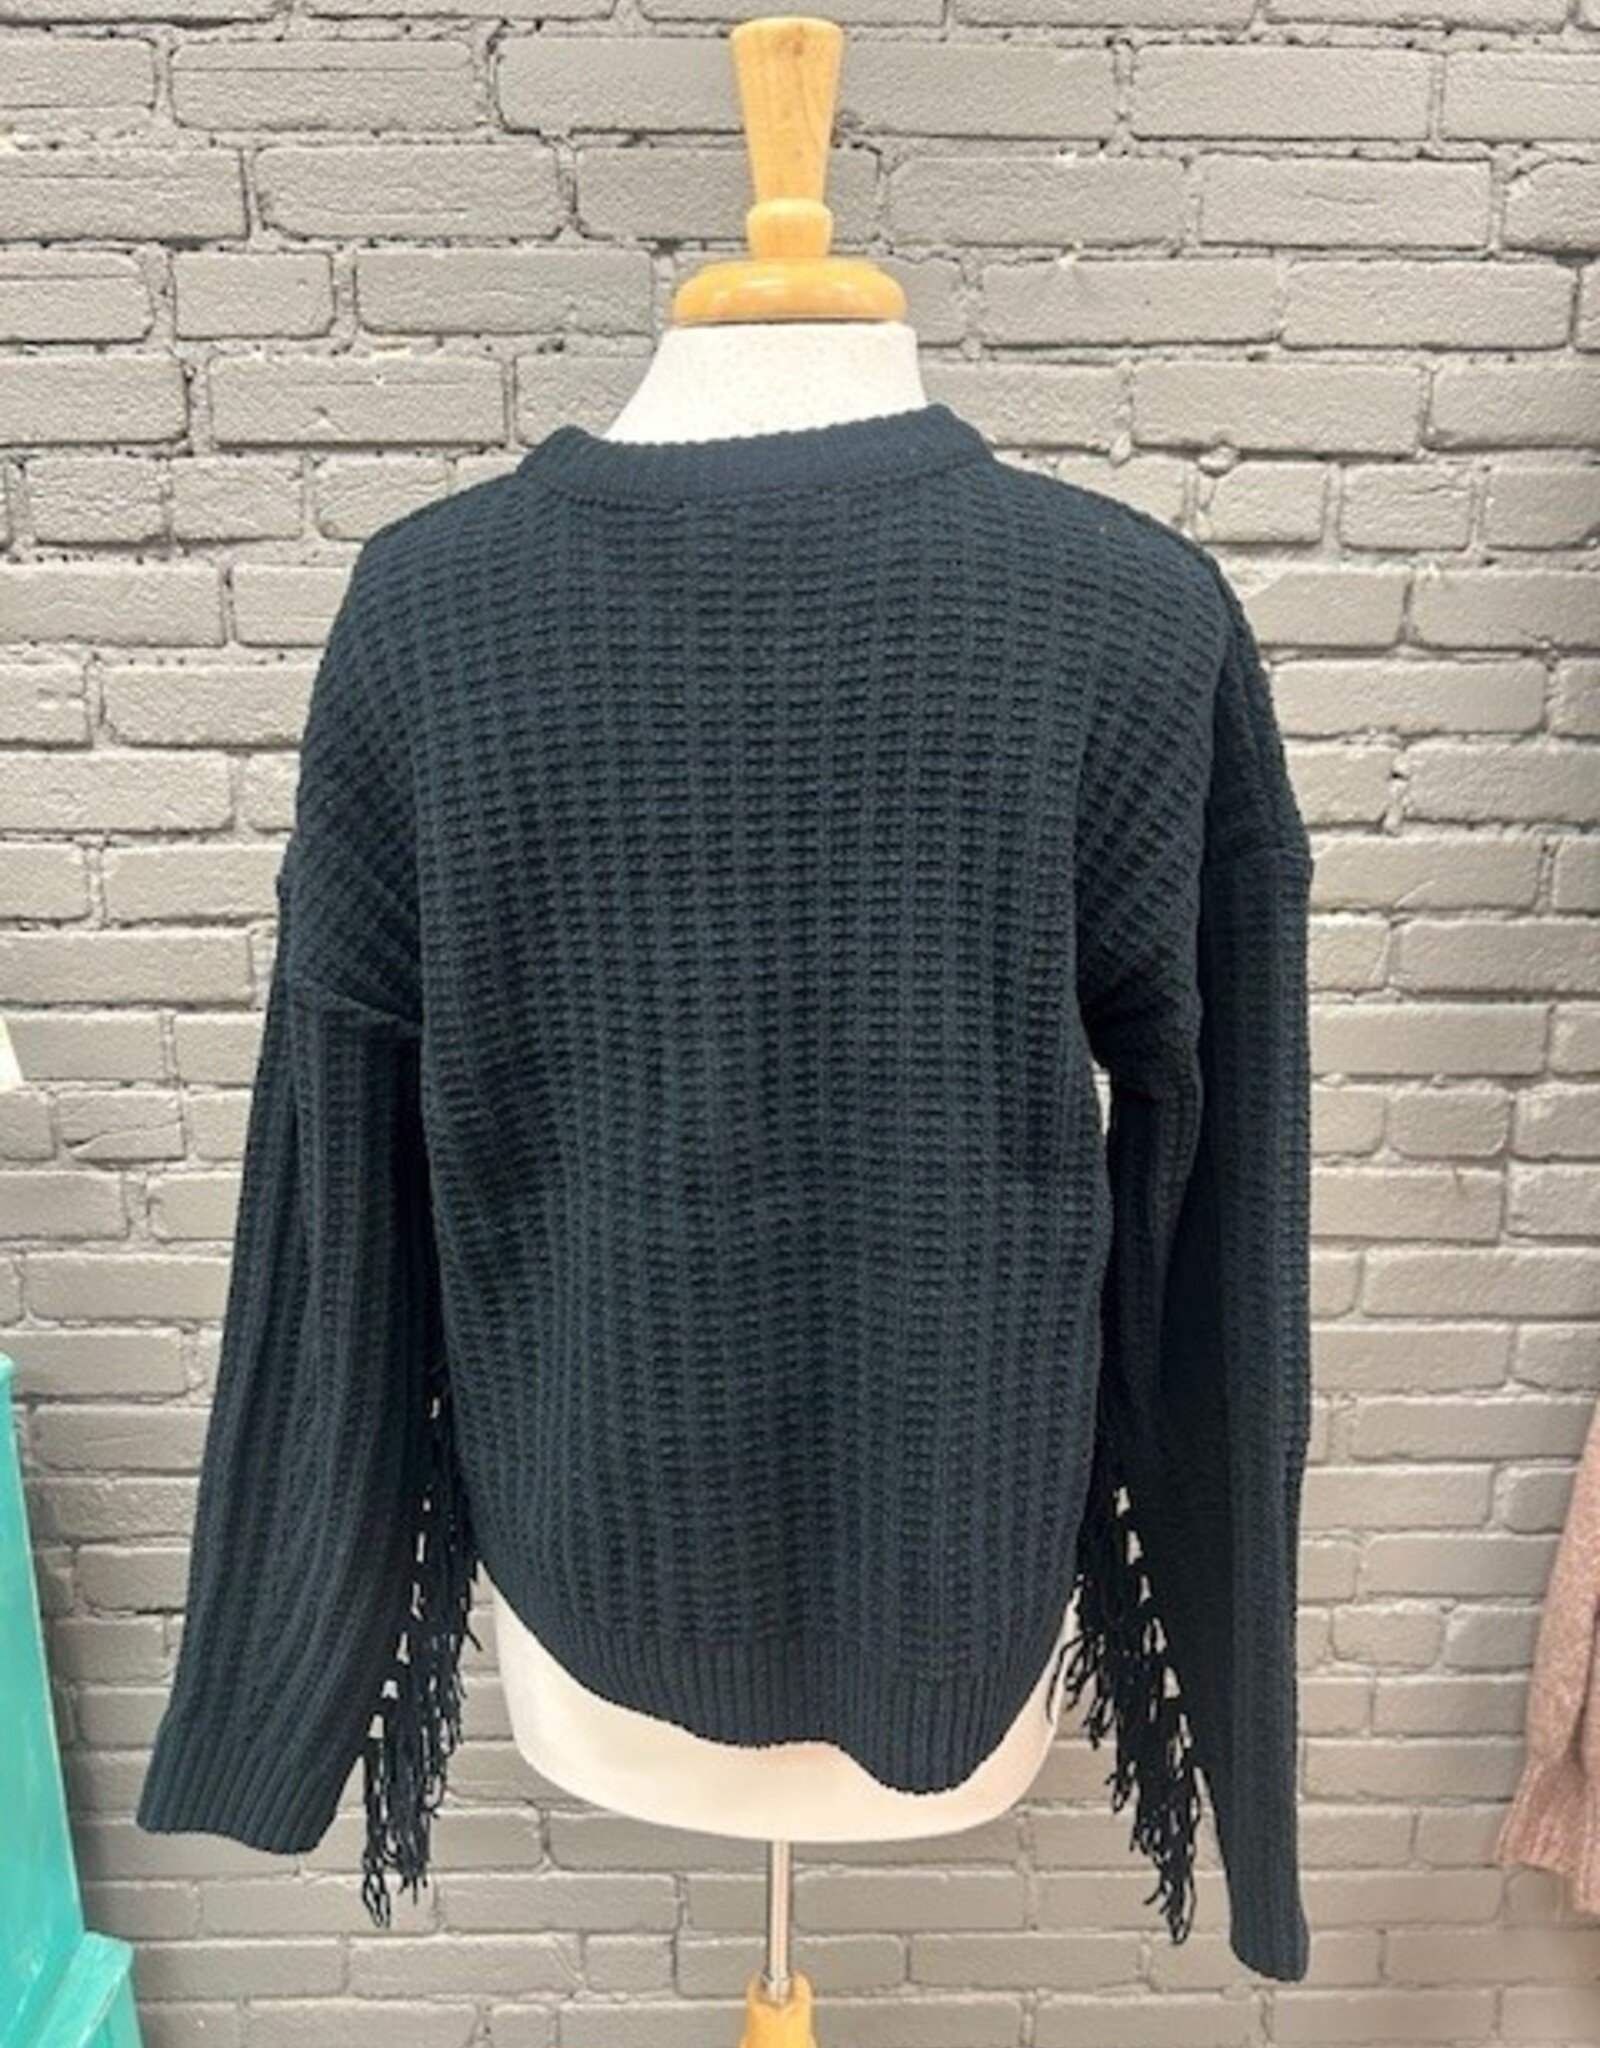 Sweater Everly Fringe Black Sweater Top